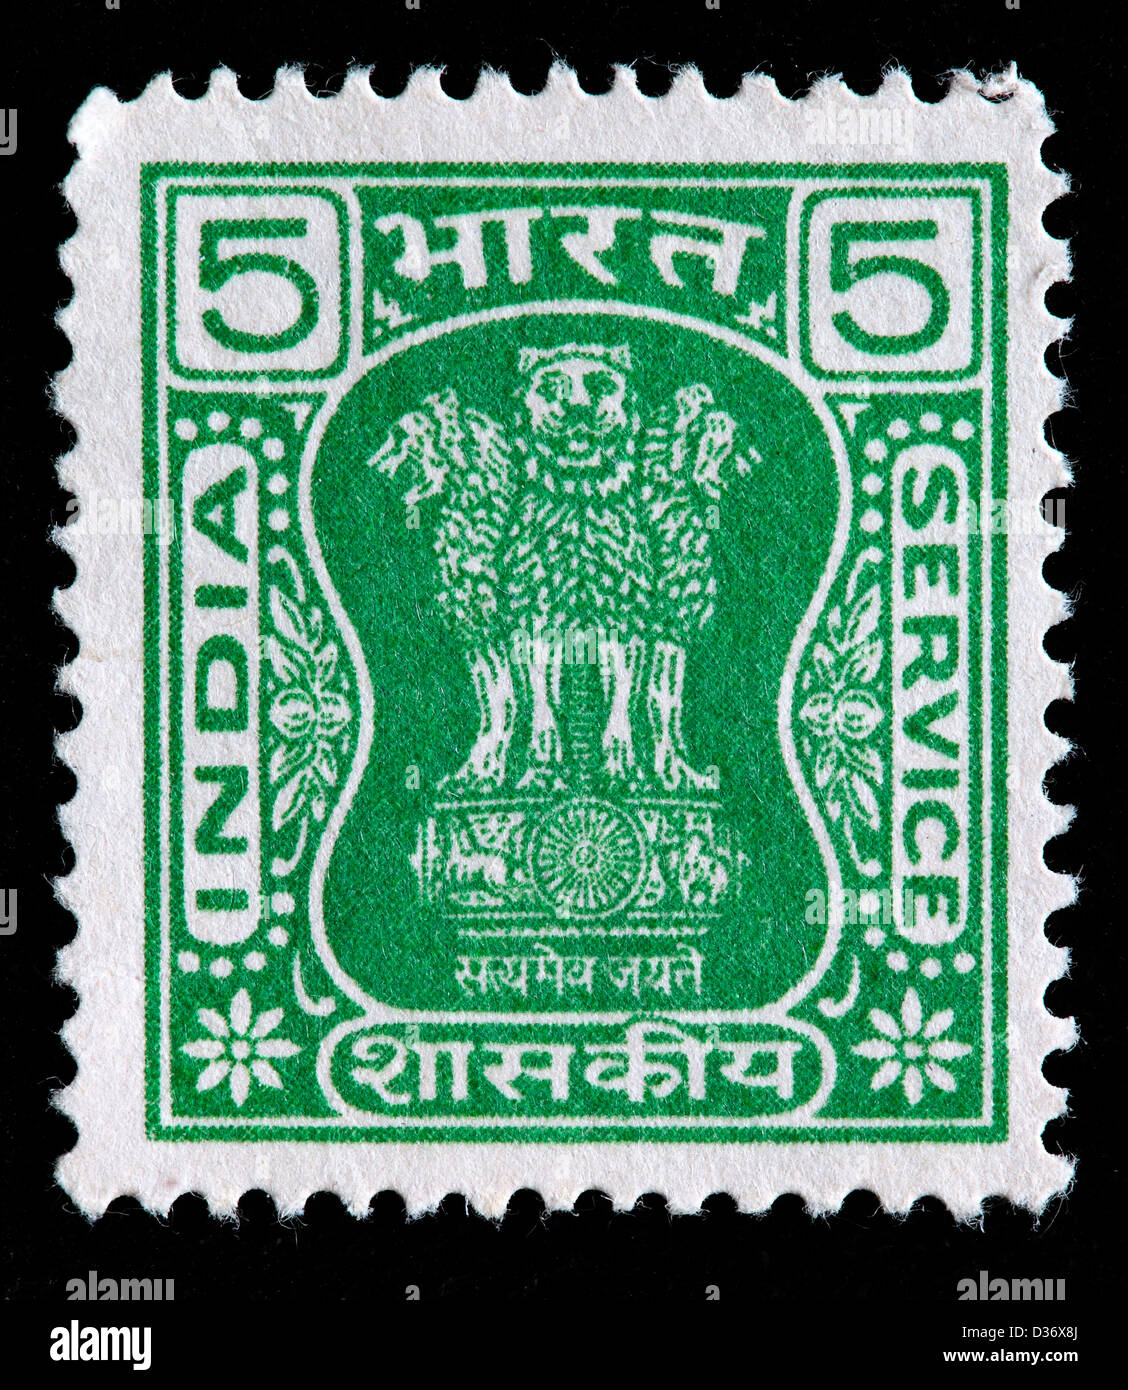 India 1967 25 N.P. Service Three Lions postal stamp